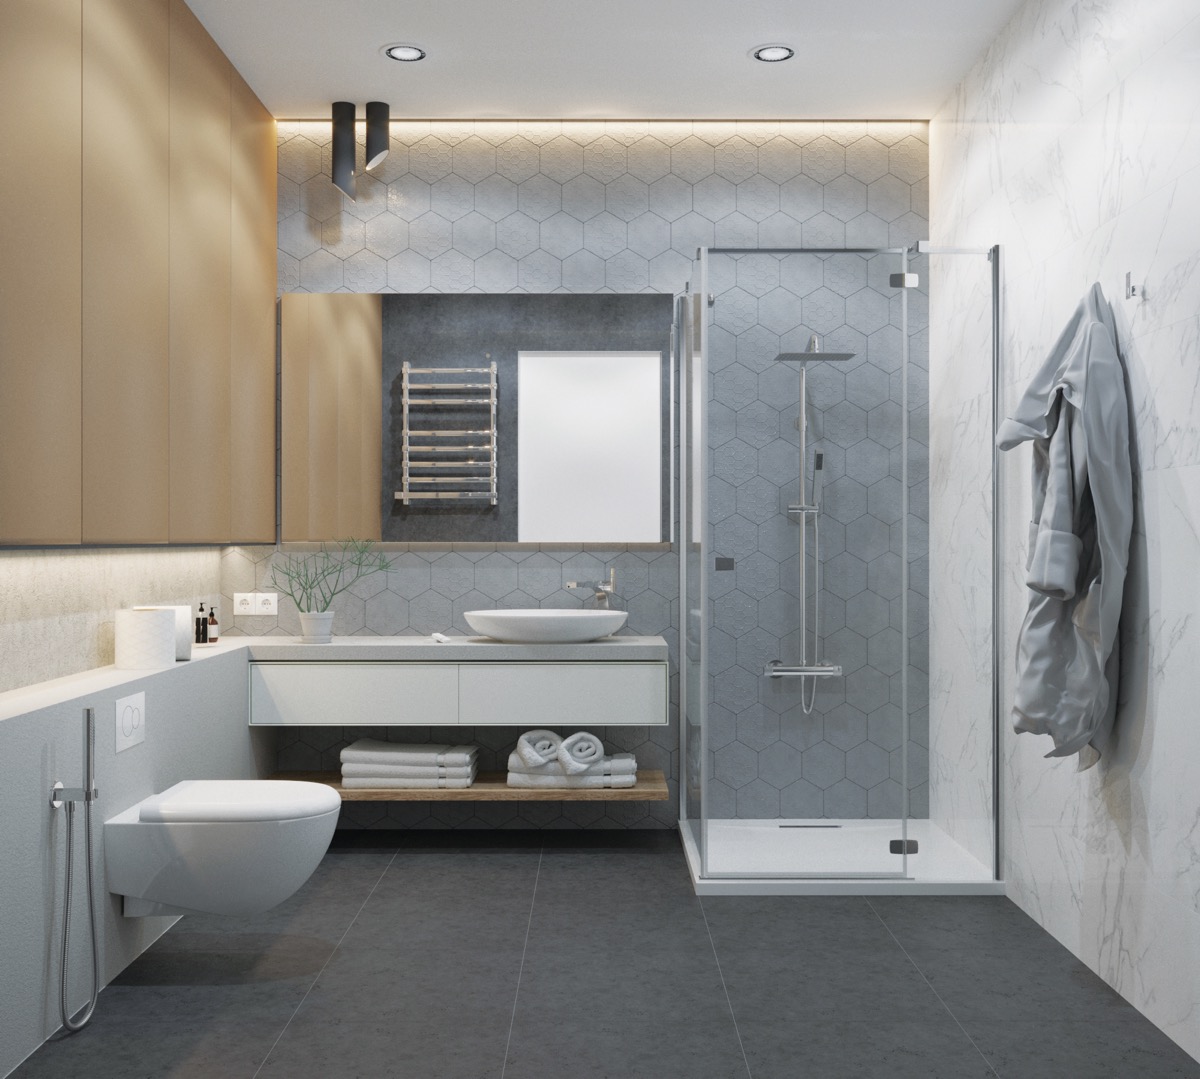 Bathroom Tile Idea Use Large Tiles On The Floor And Walls 18